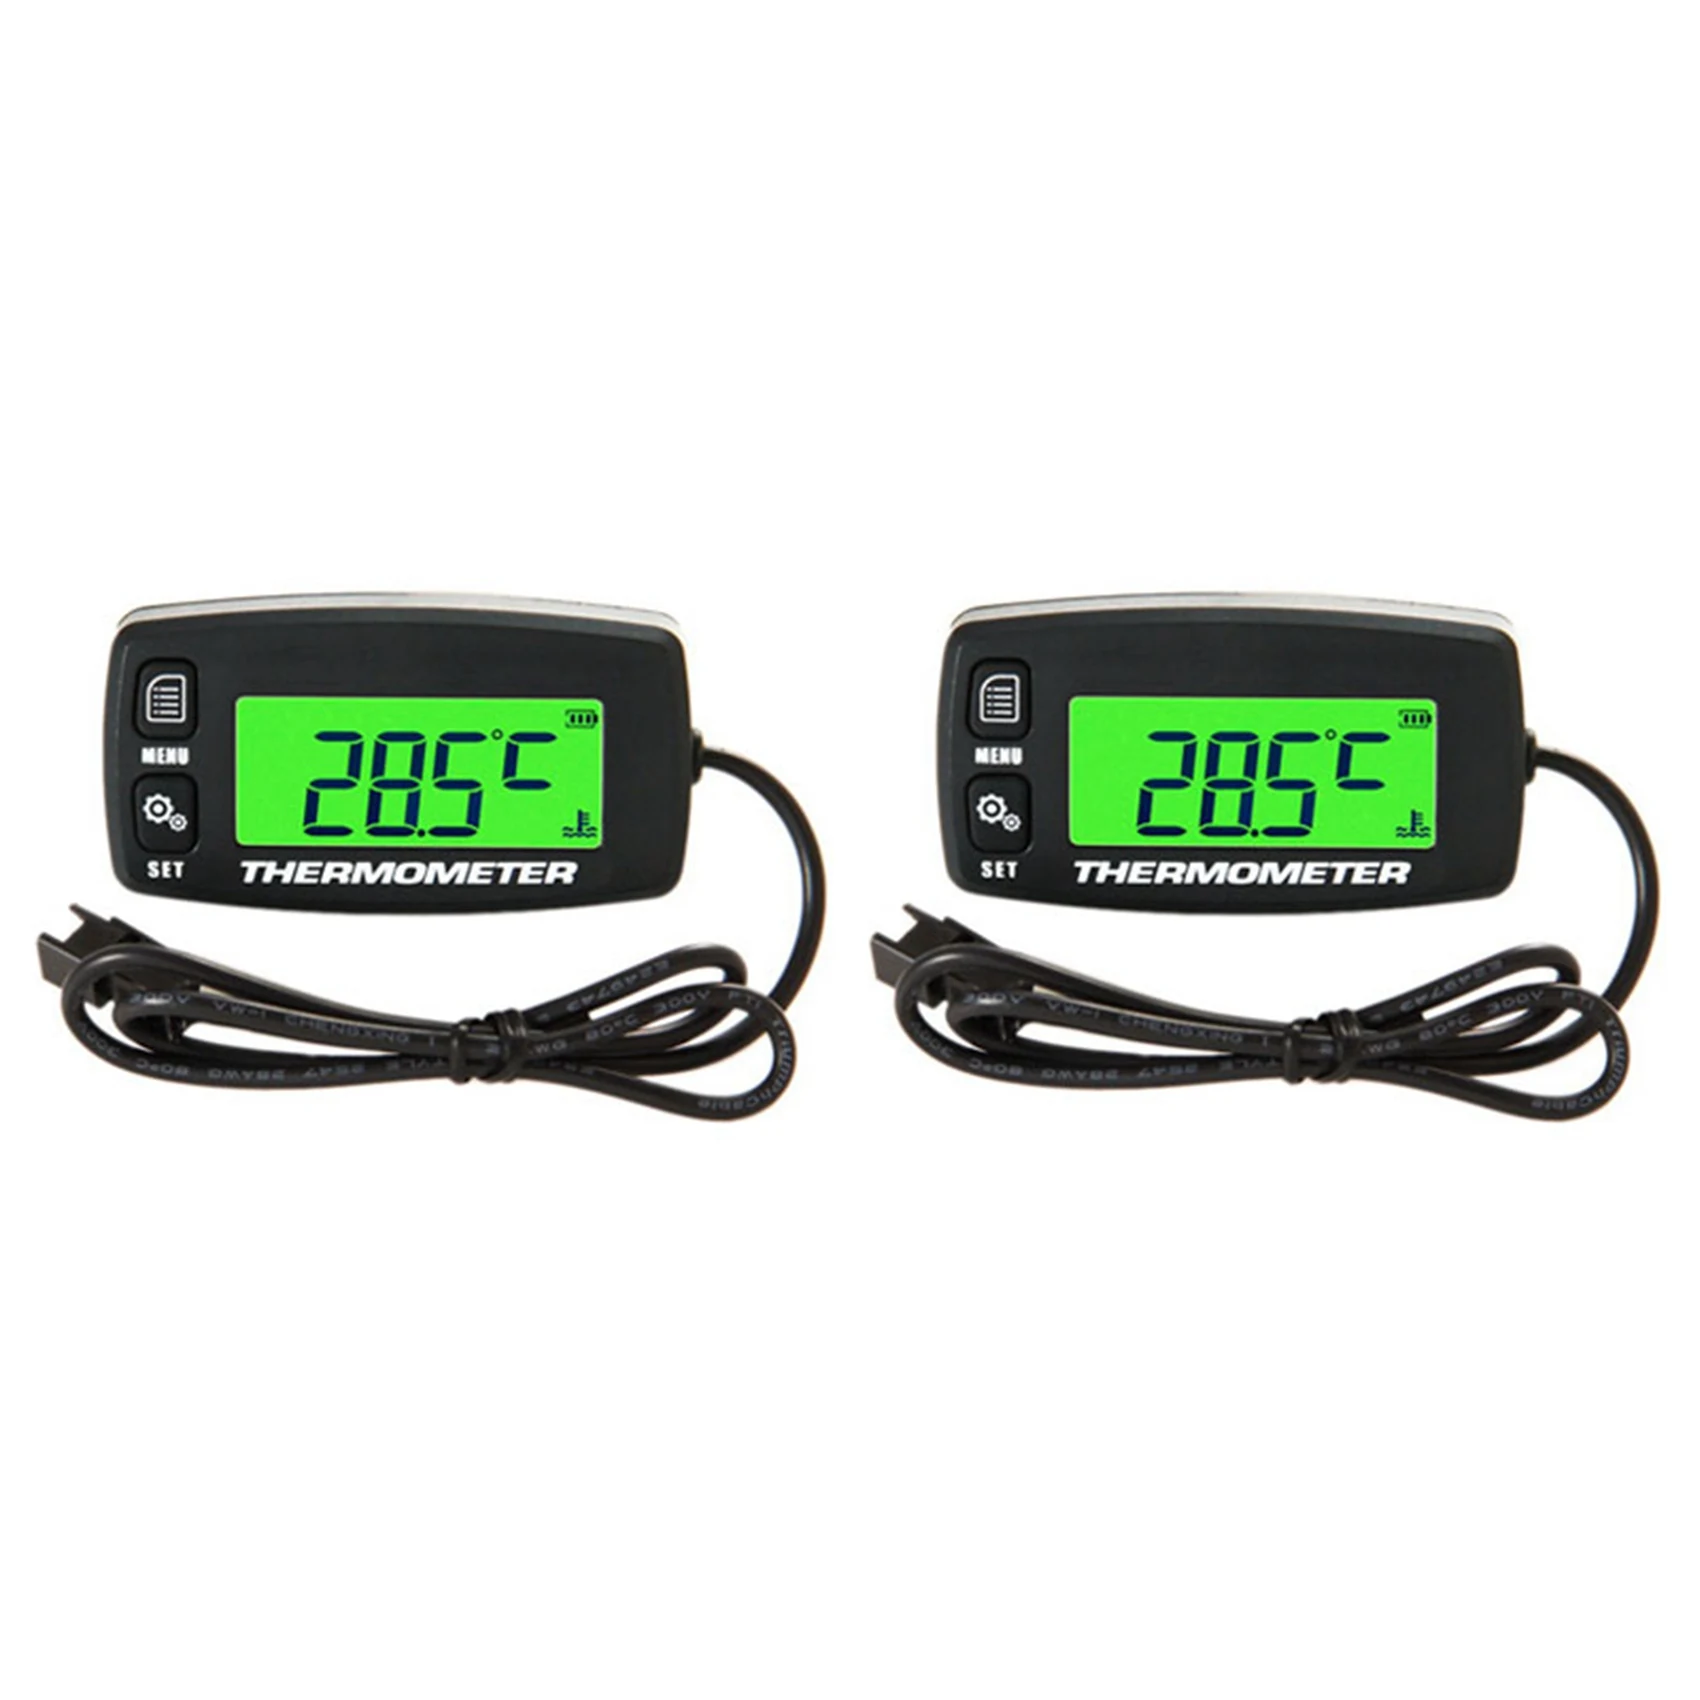 

2X Digital LCD Engine Temperature Gauge Over-Temperature Alert with Sensor RL-TS002 for Motorcycle Dirtbike ATV